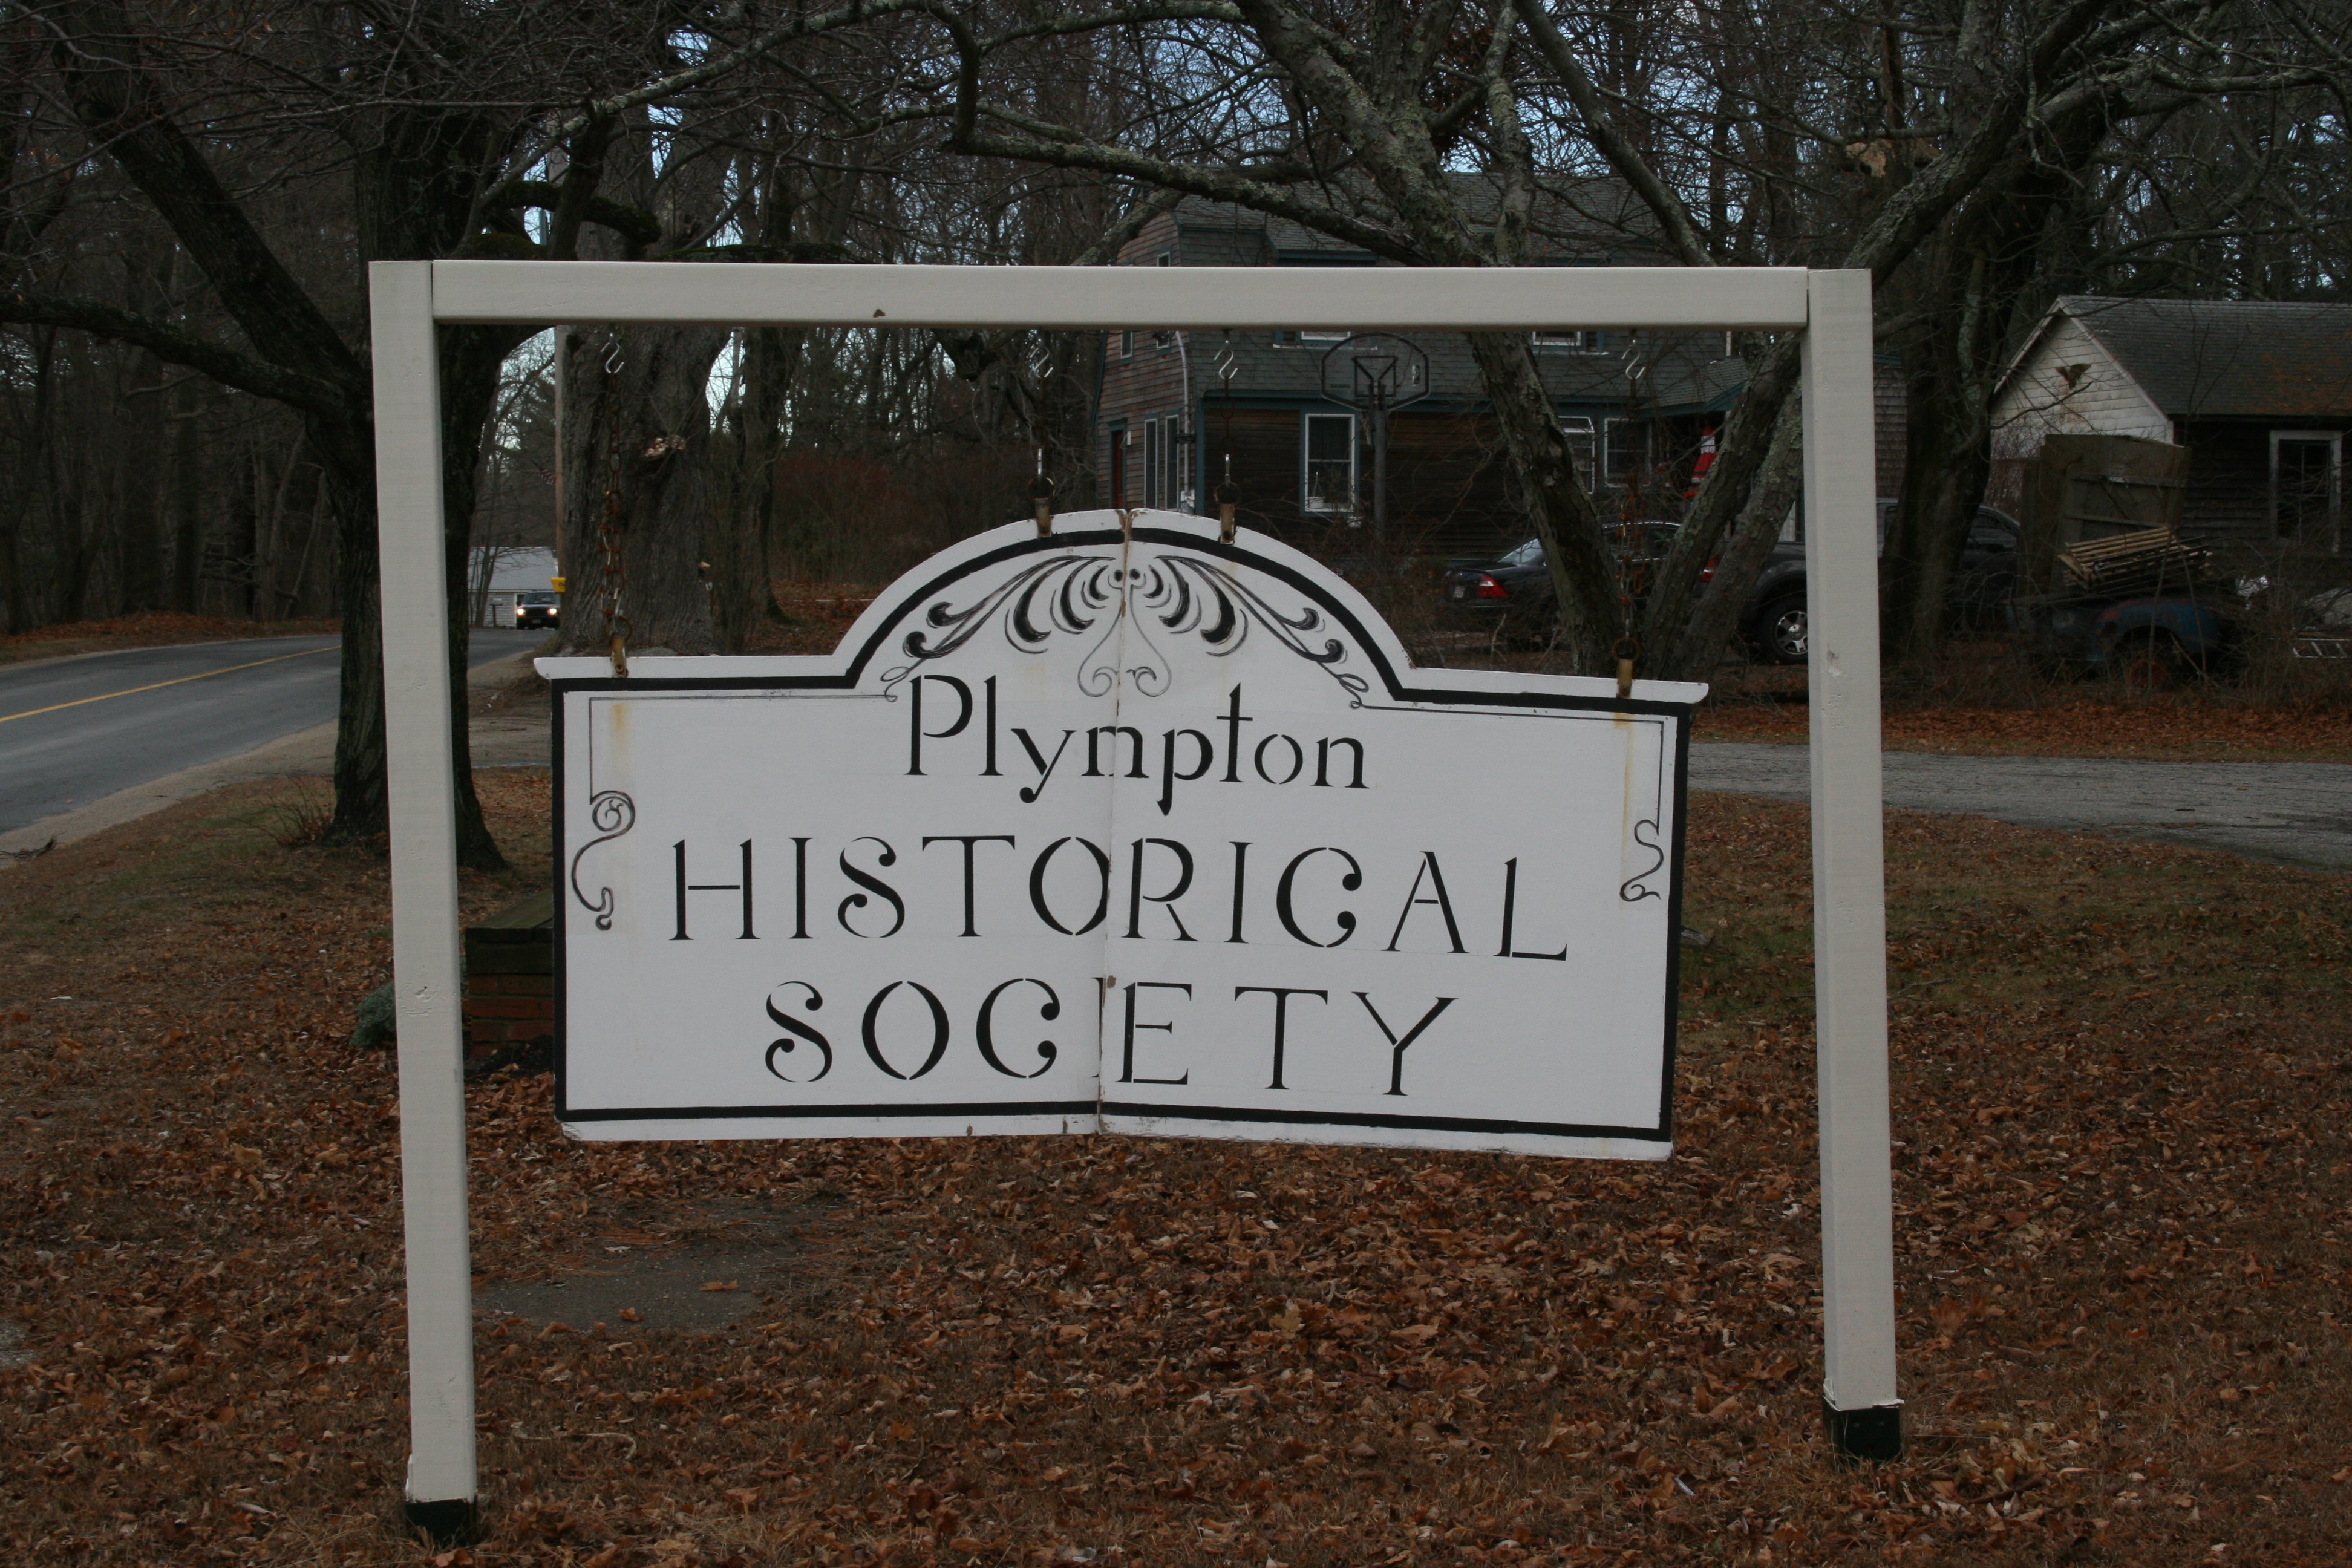 Previous Plympton Historical Society's sign